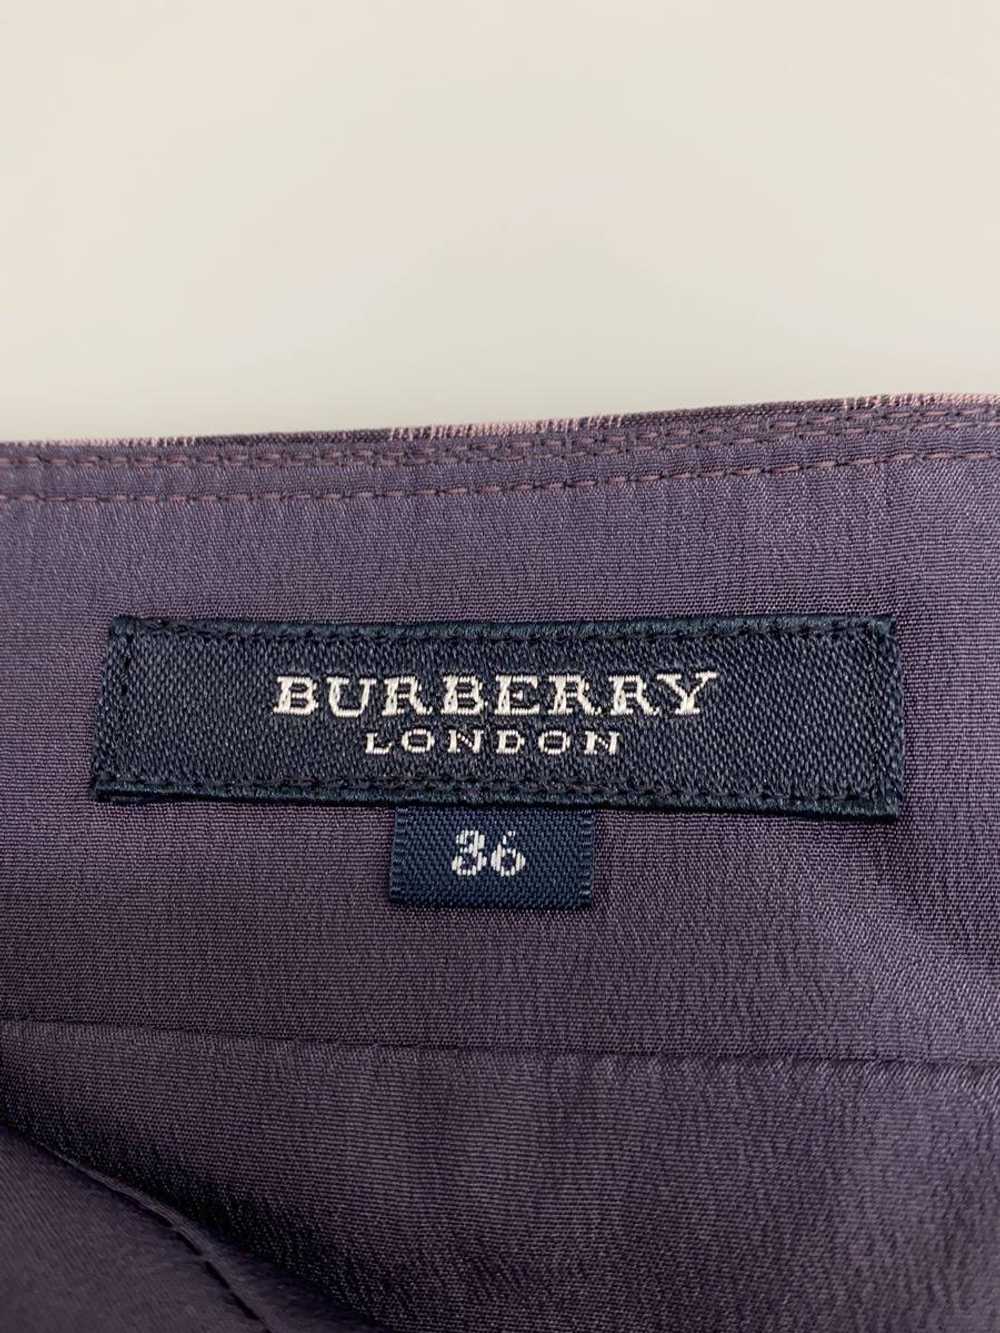 Used Burberry London Skirt/36/Silk/Purple Women - image 4